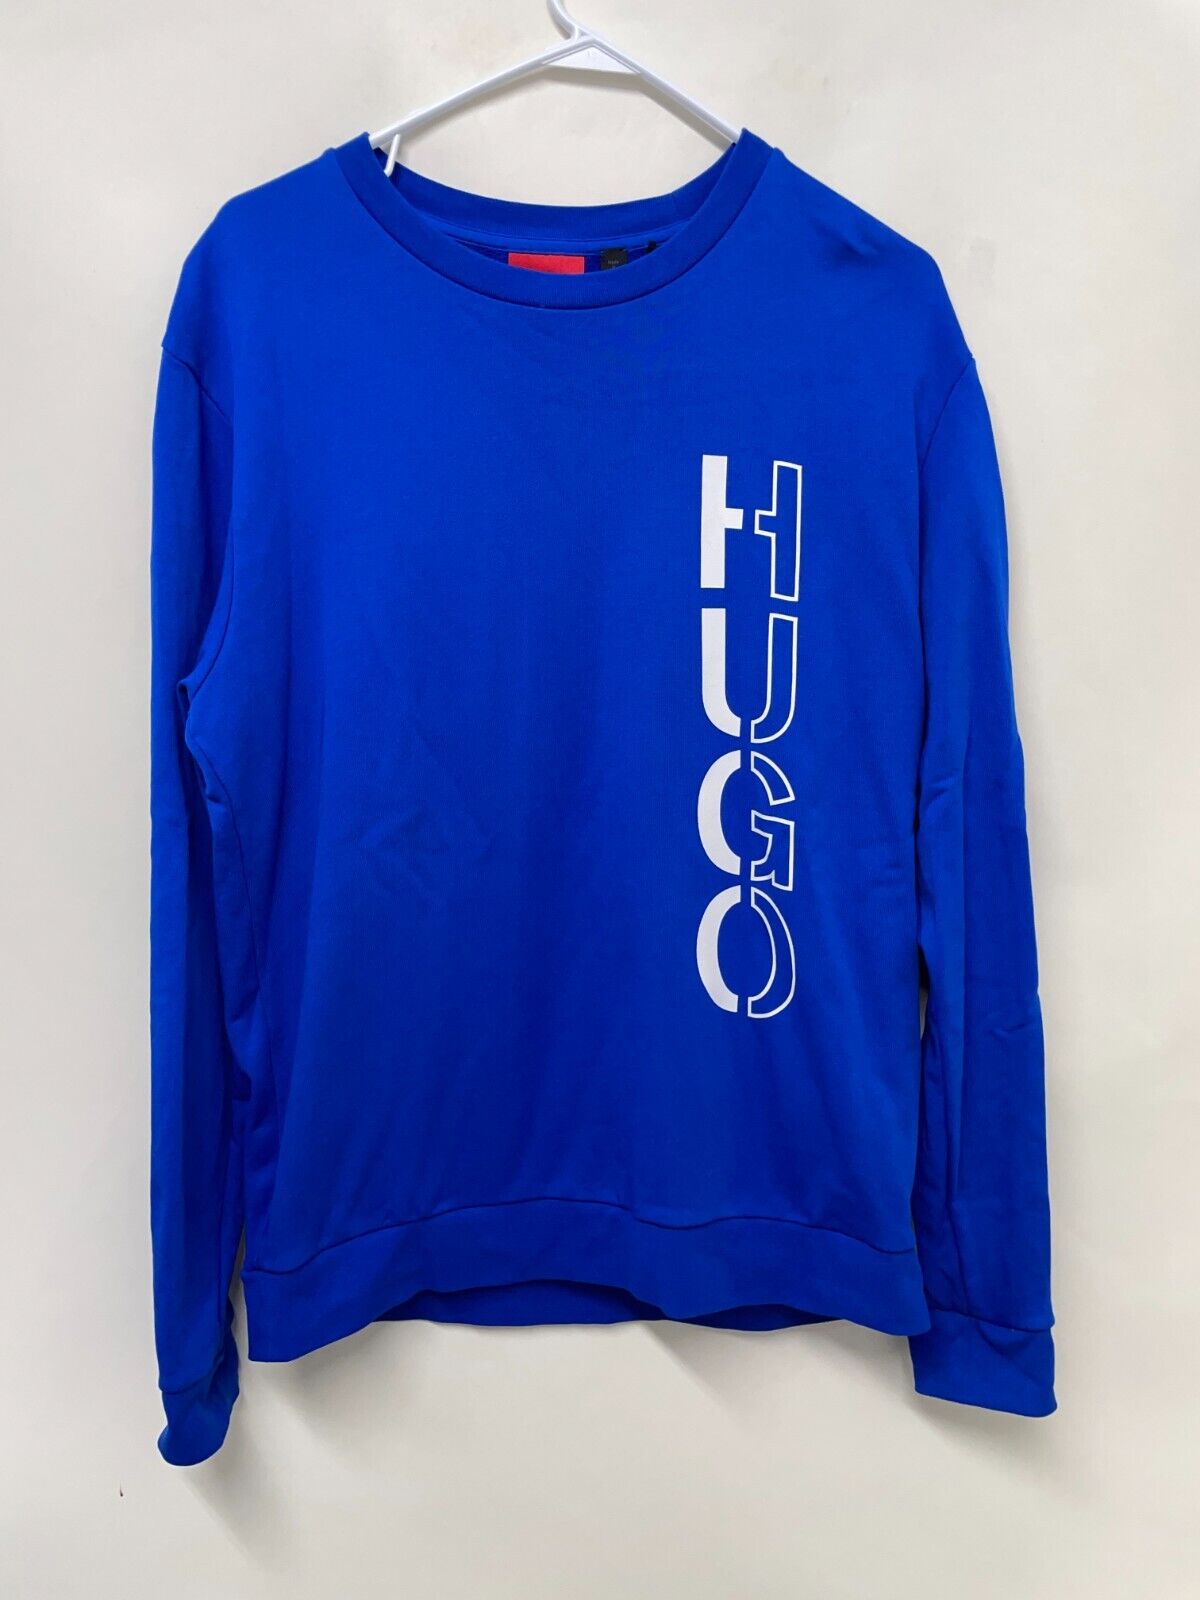 Hugo Boss Mens L Graphic Logo Sweatshirt Medium Blue Cotton Crew Neck Pullover